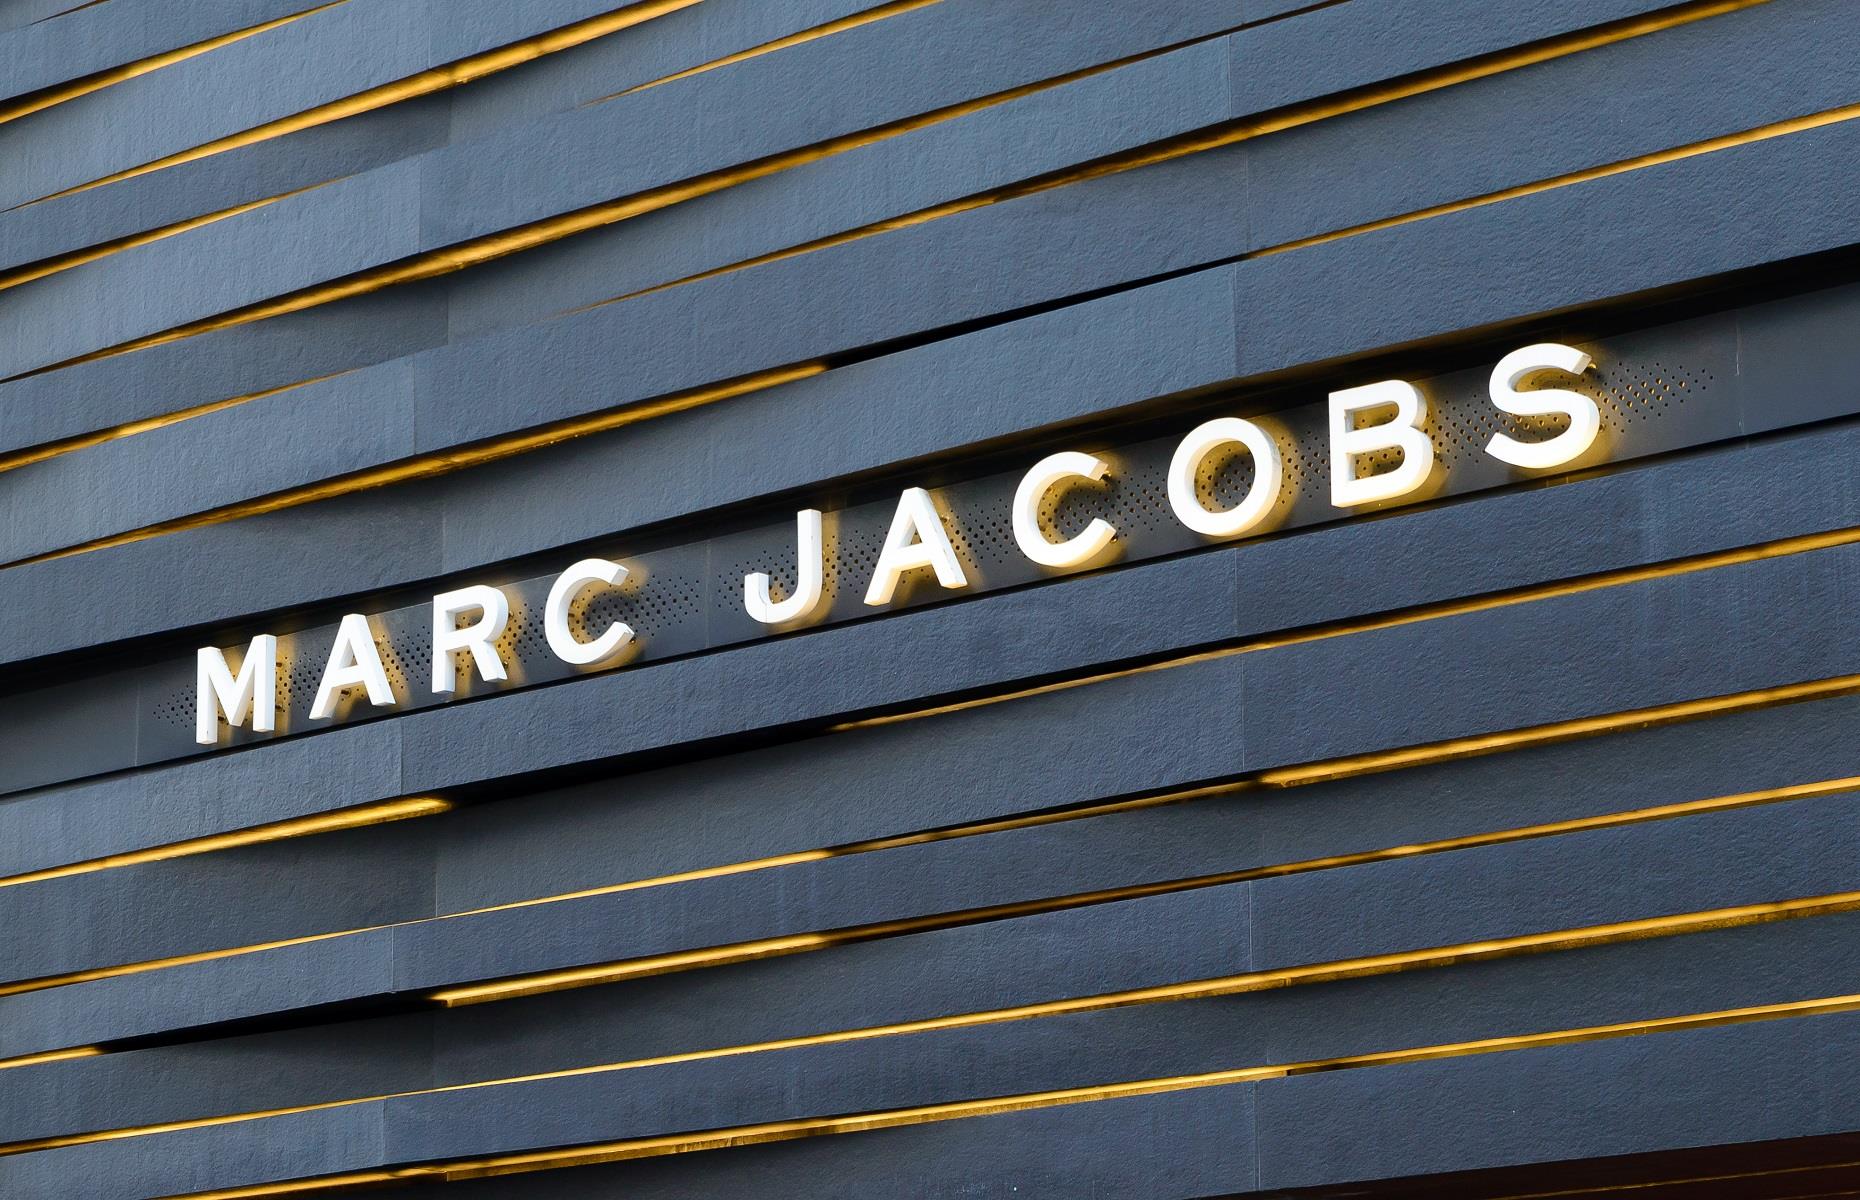 Marc Jacobs 